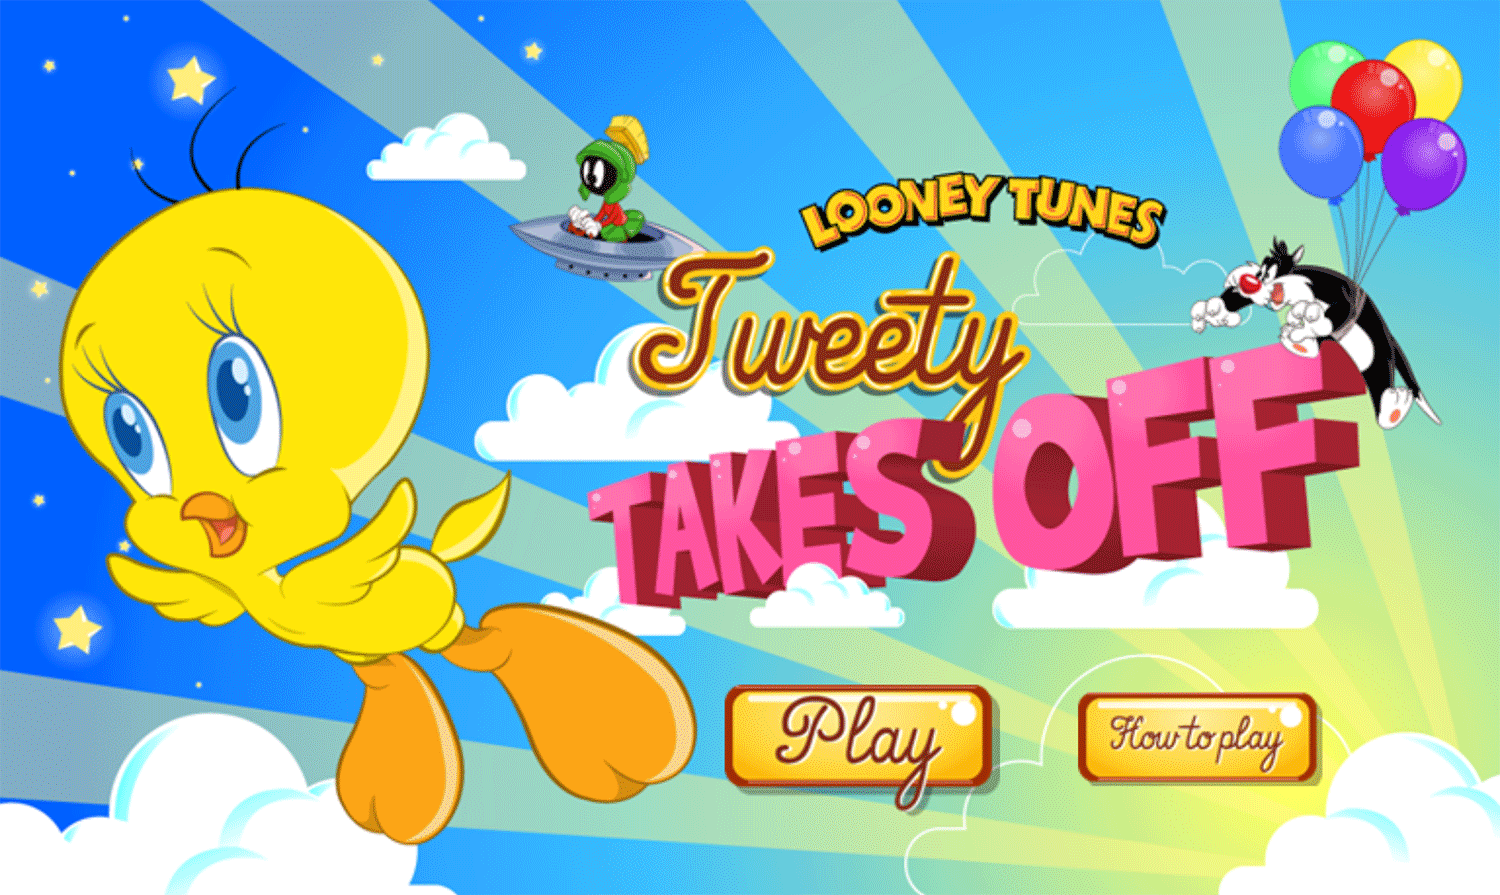 Looney Tunes Tweety Takes Off Game Welcome Screen Screenshot.